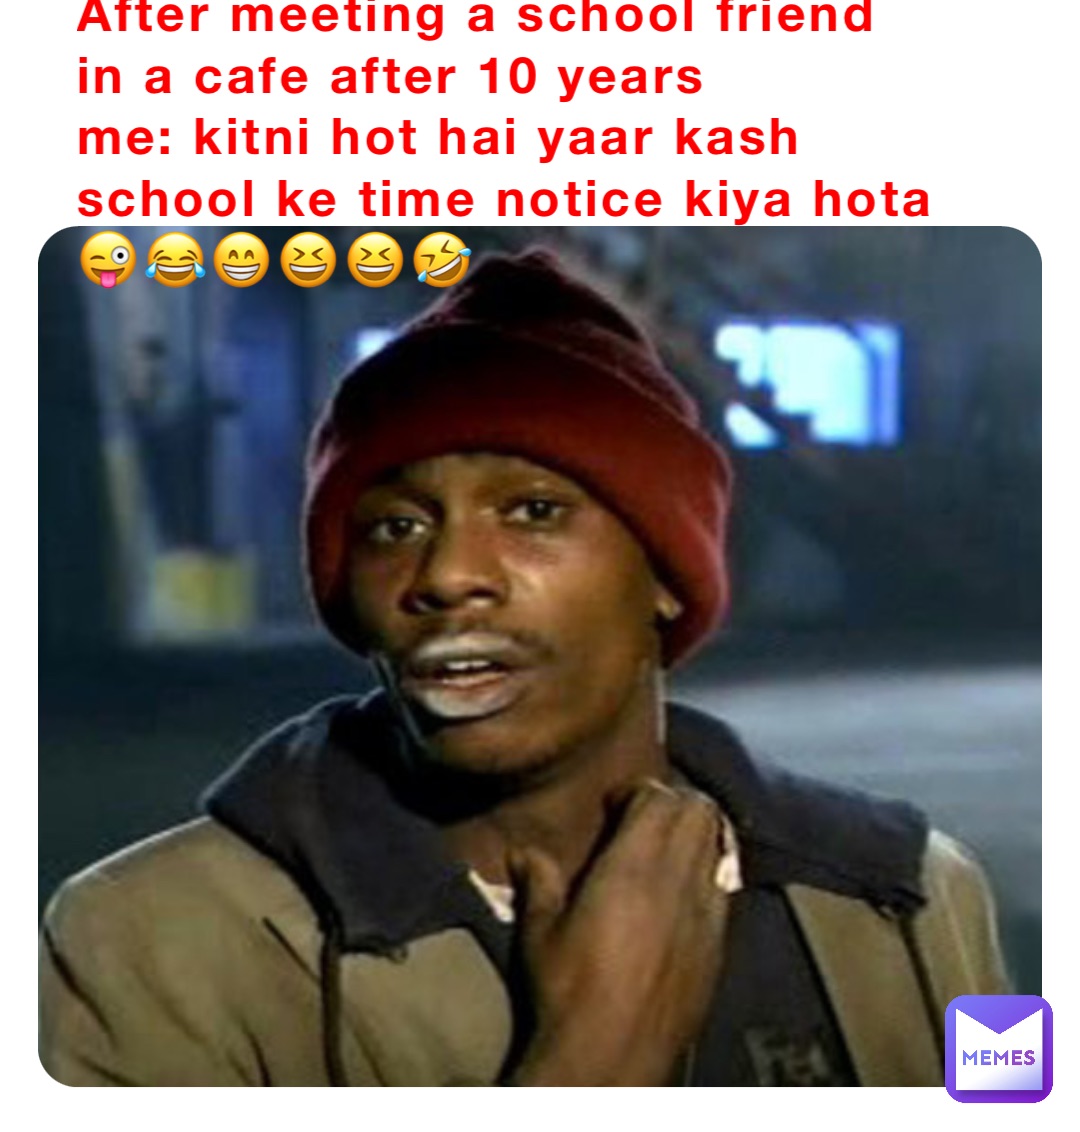 After meeting a school friend in a cafe after 10 years
Me: Kitni hot hai yaar kash school ke time notice kiya hota😜😂😁😆😆🤣